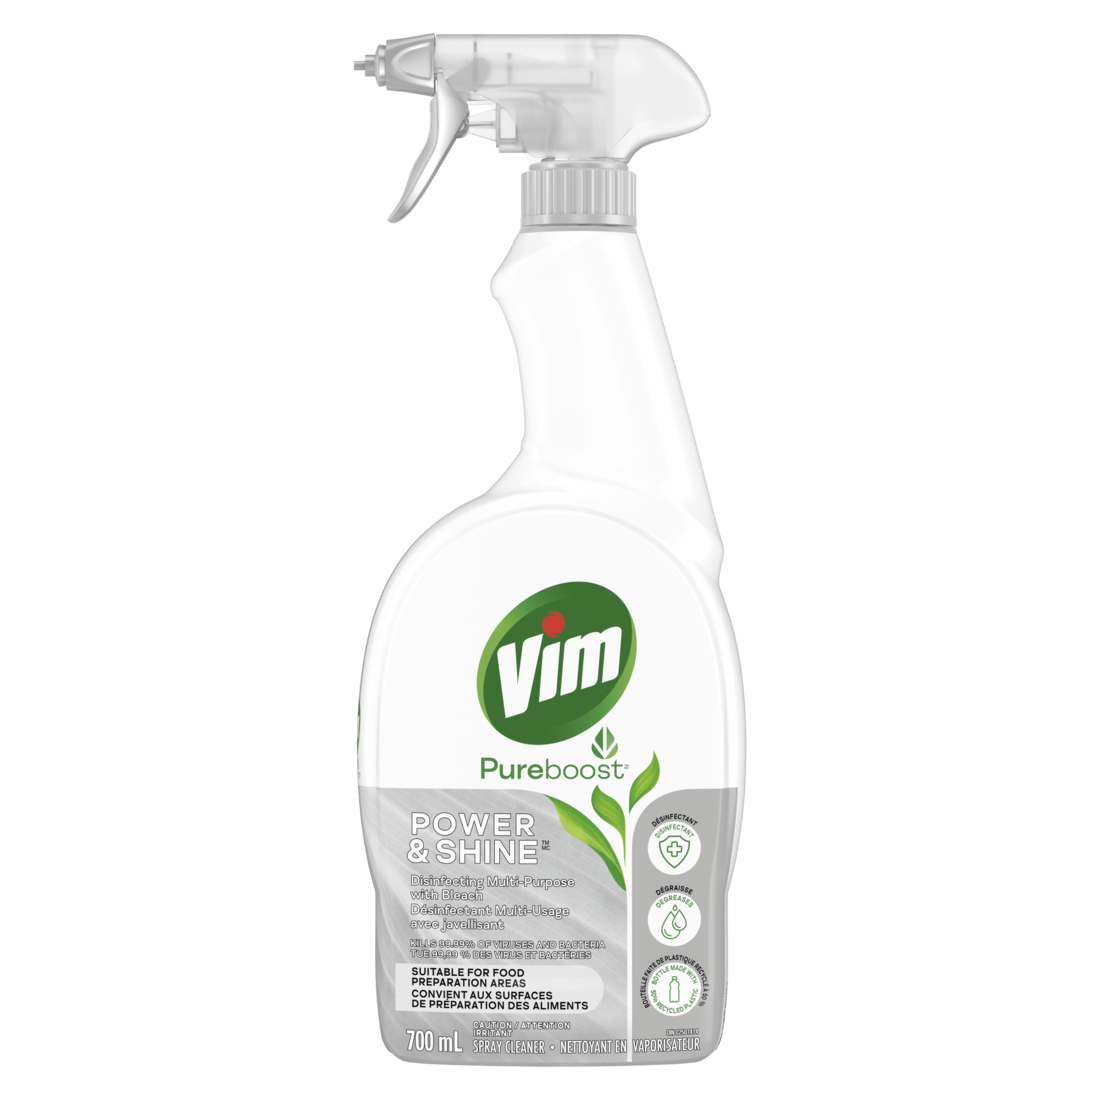 Vim Power & Shine Disinfecting Multi-Purpose with Bleach Spray